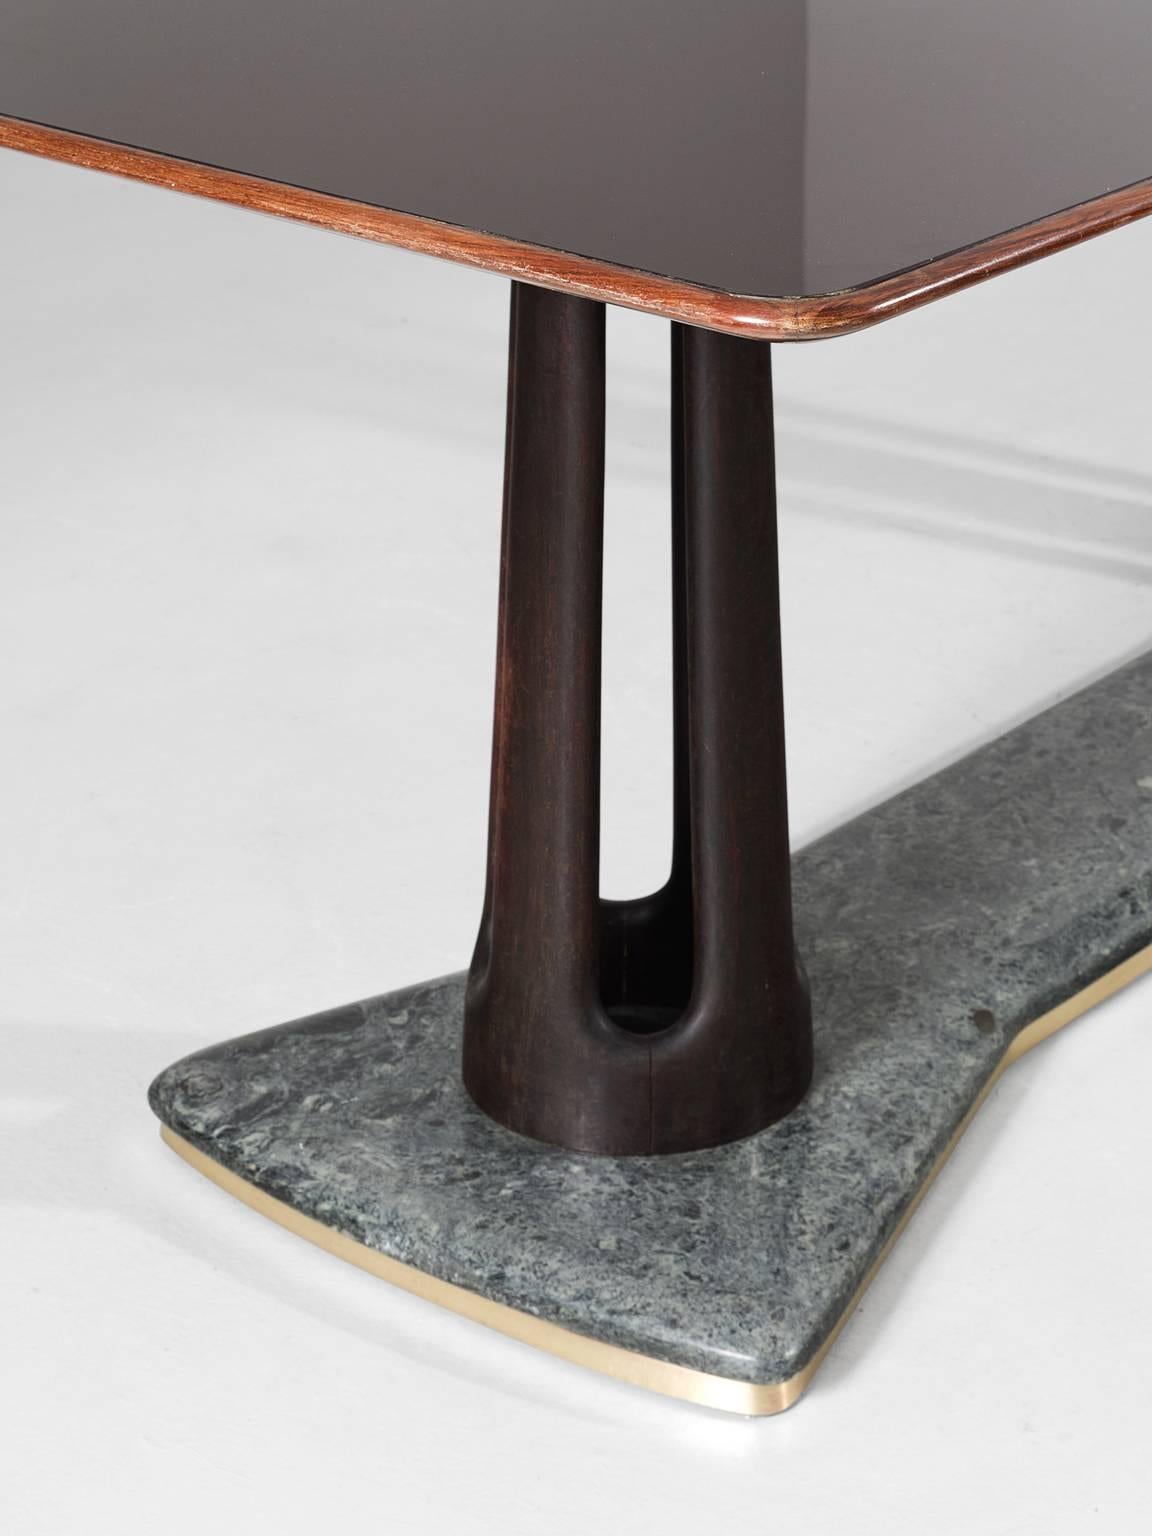 Italian Guglielmo Ulrich Attributed Center Table in Serpentine Marble